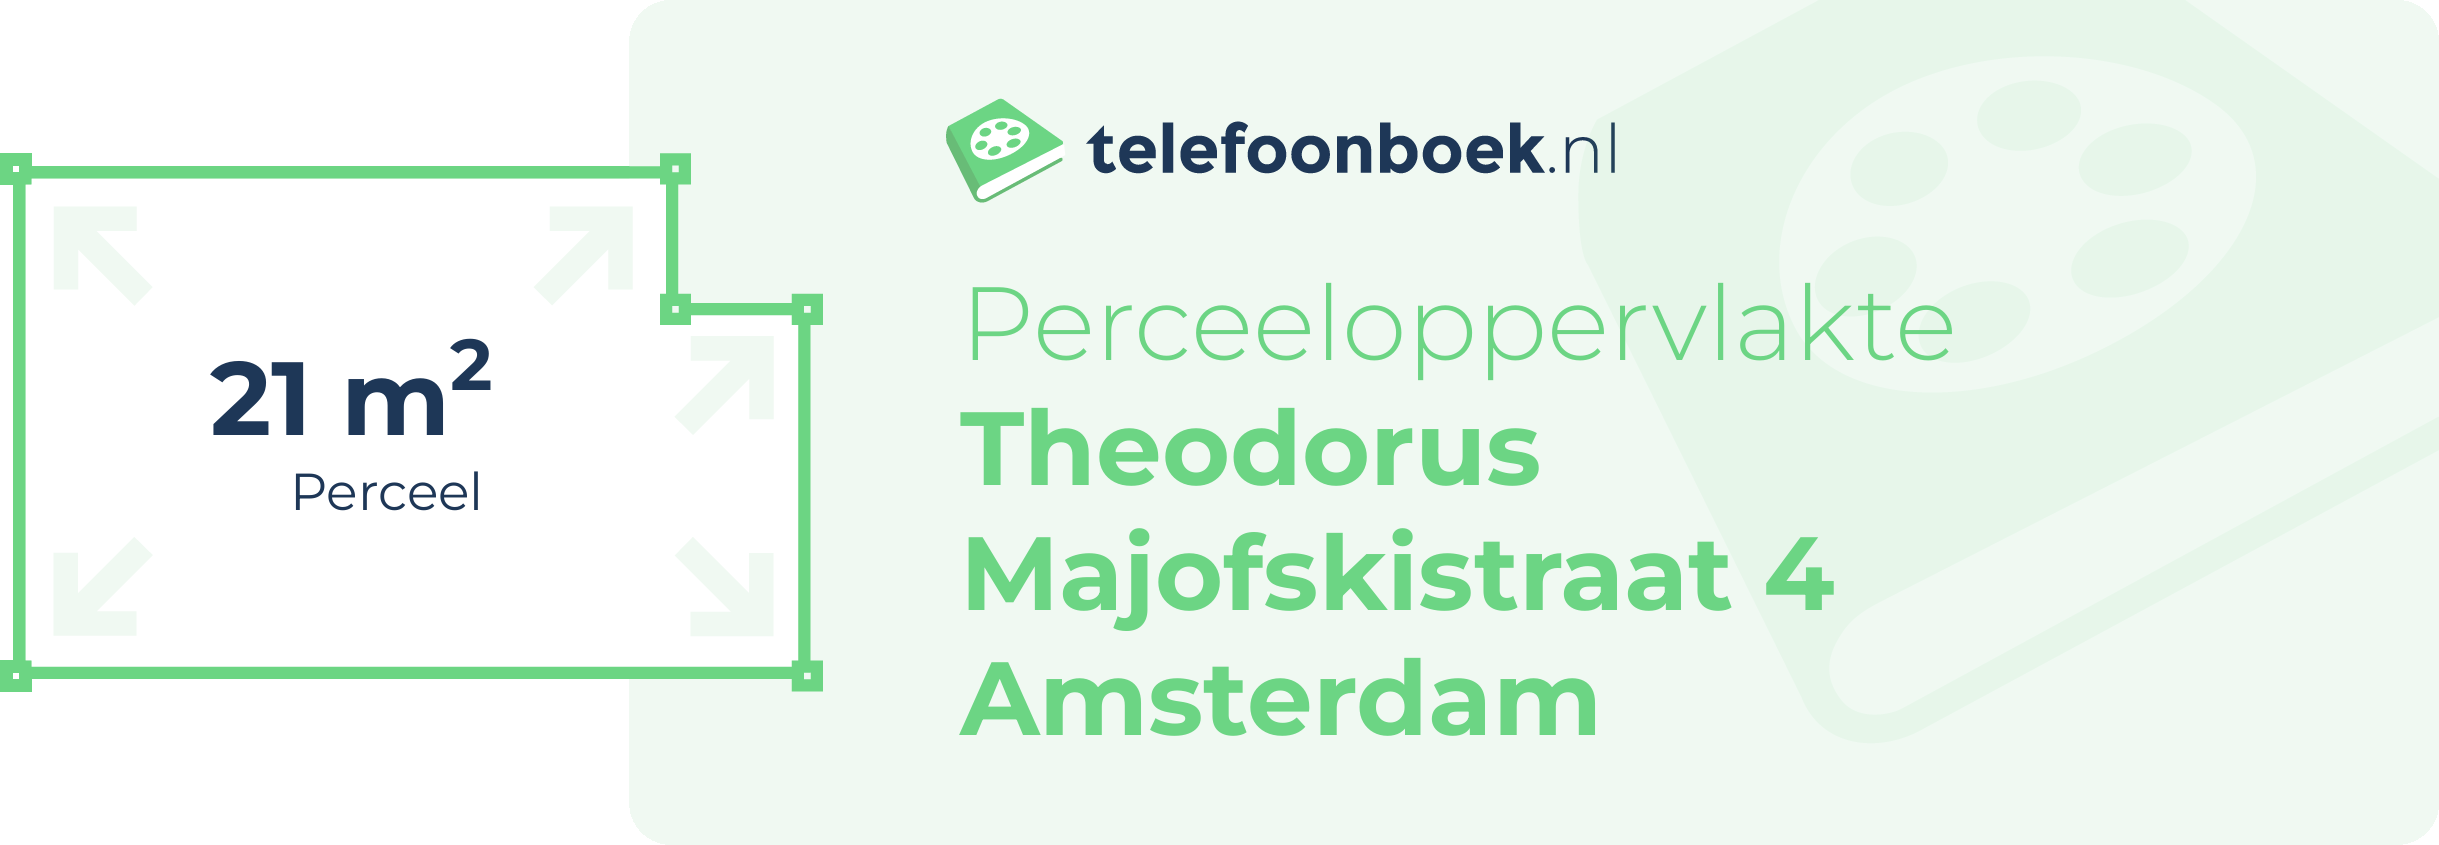 Perceeloppervlakte Theodorus Majofskistraat 4 Amsterdam